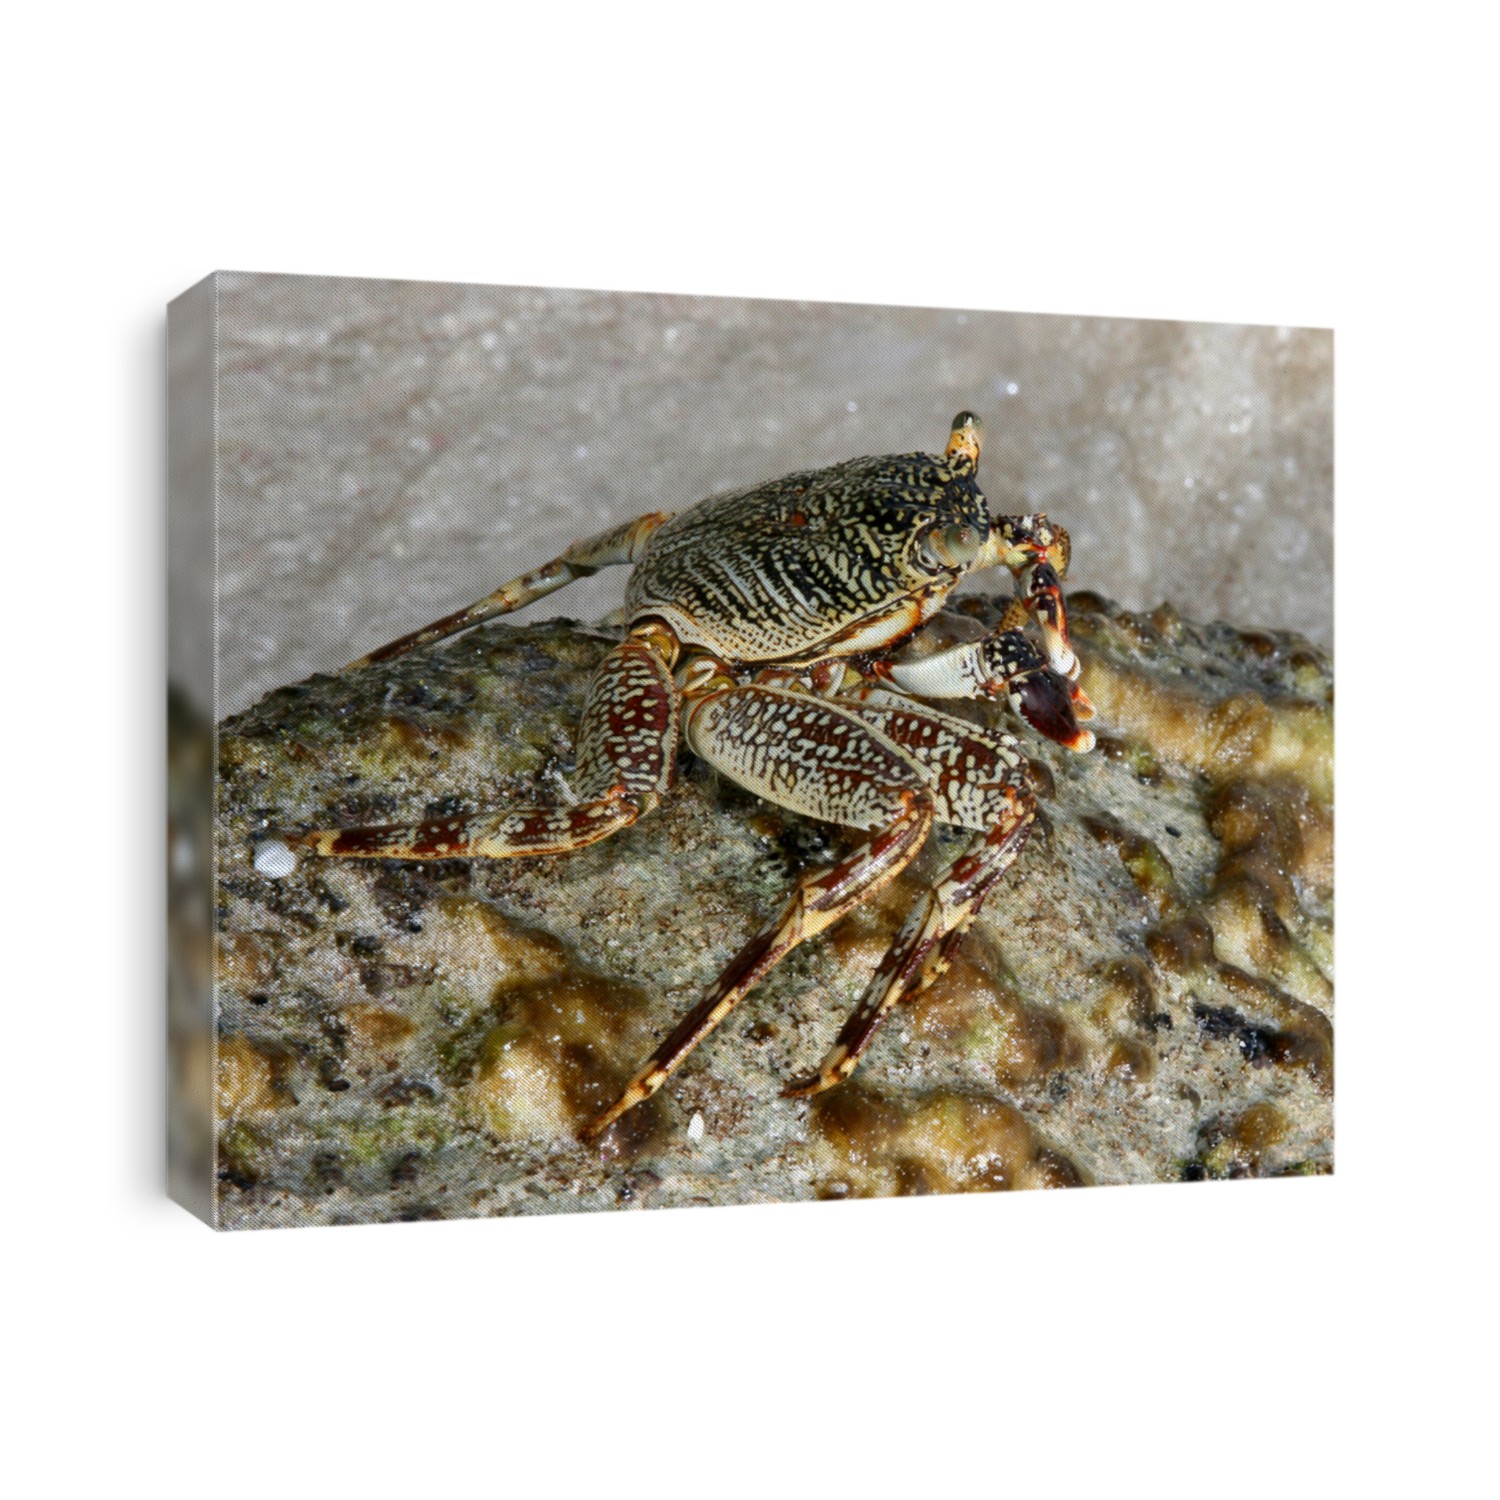 Crab on stone.